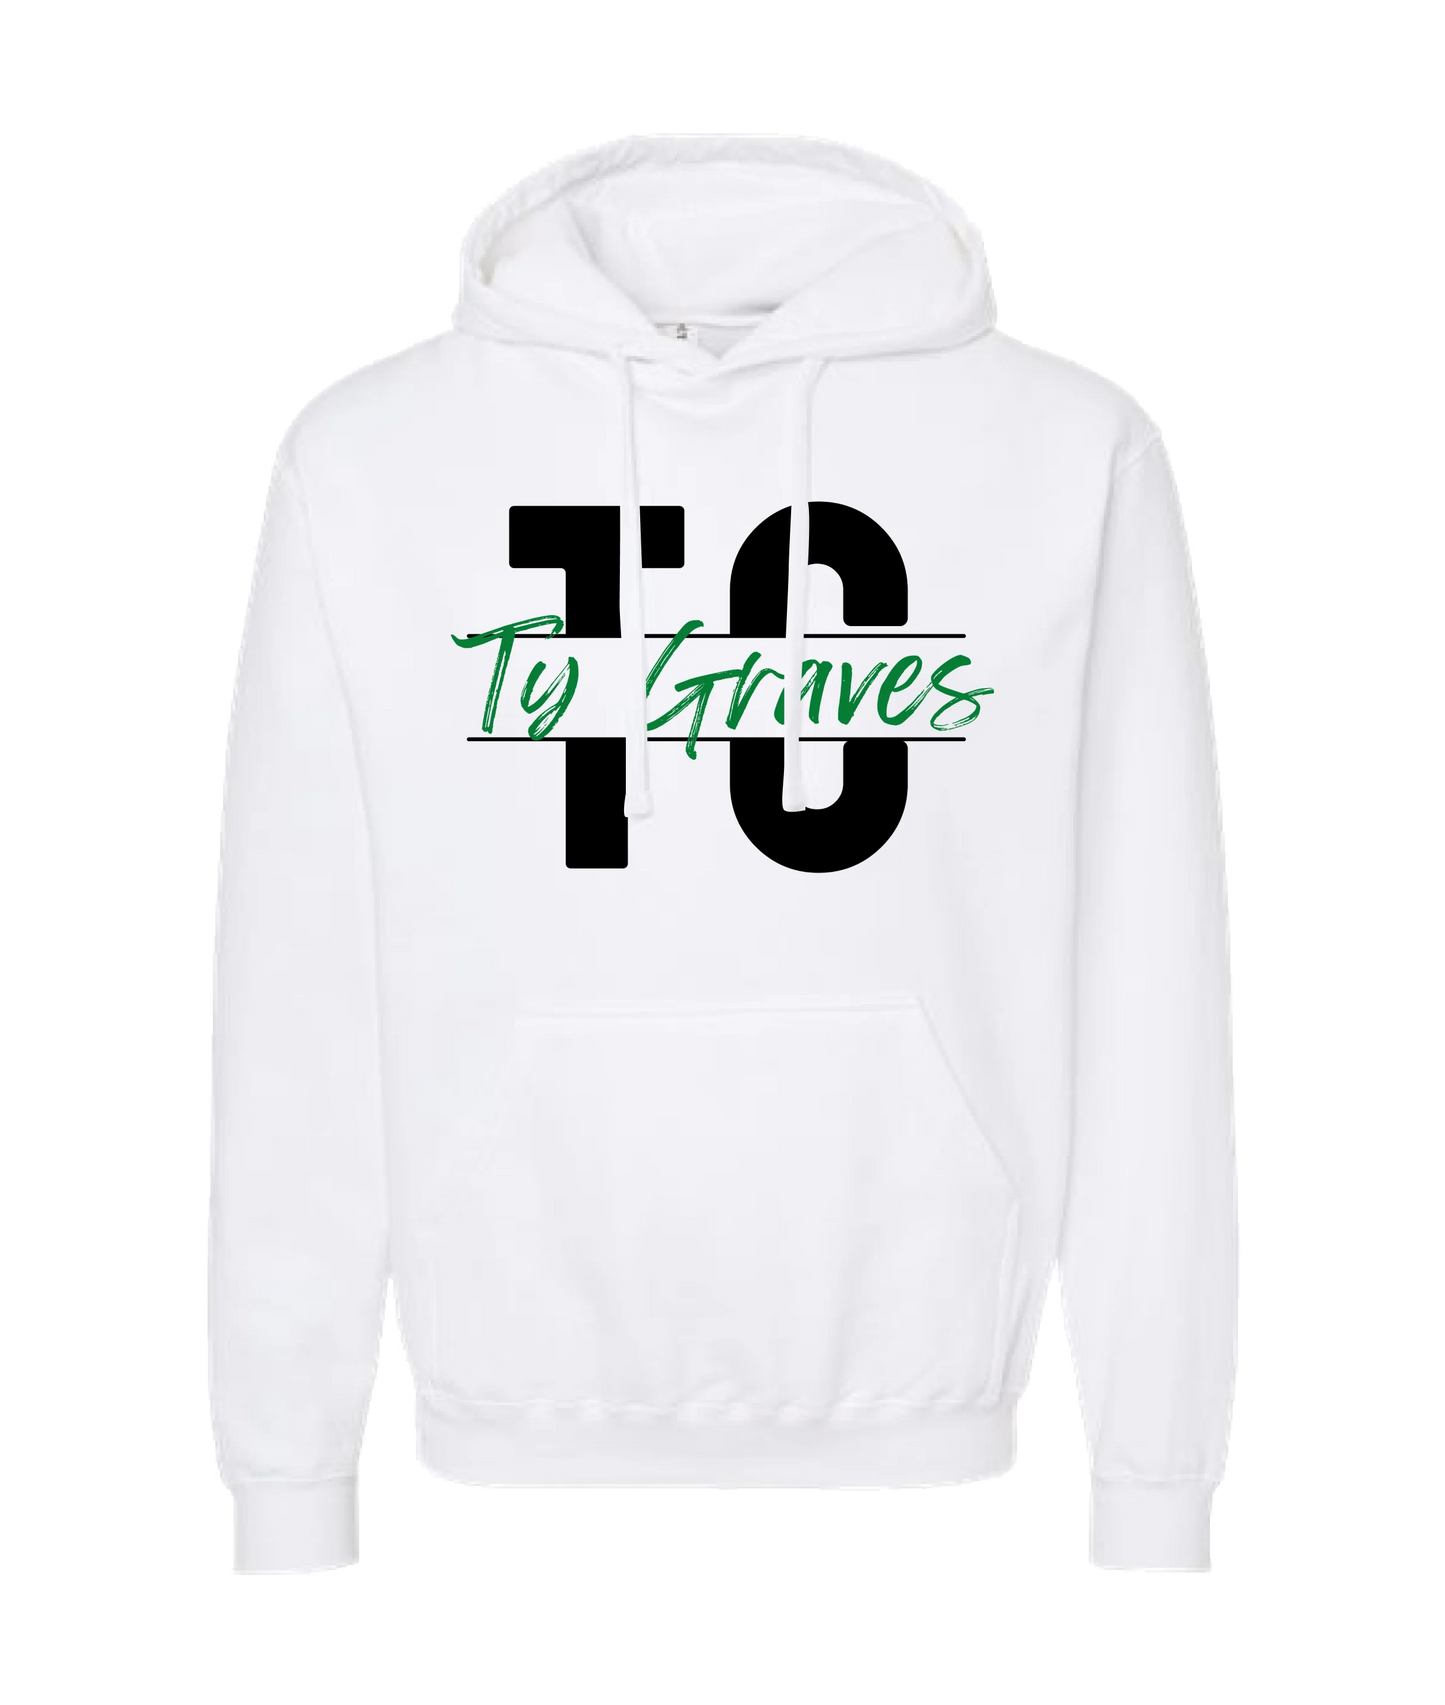 Ty Graves - Logo - White Hoodie